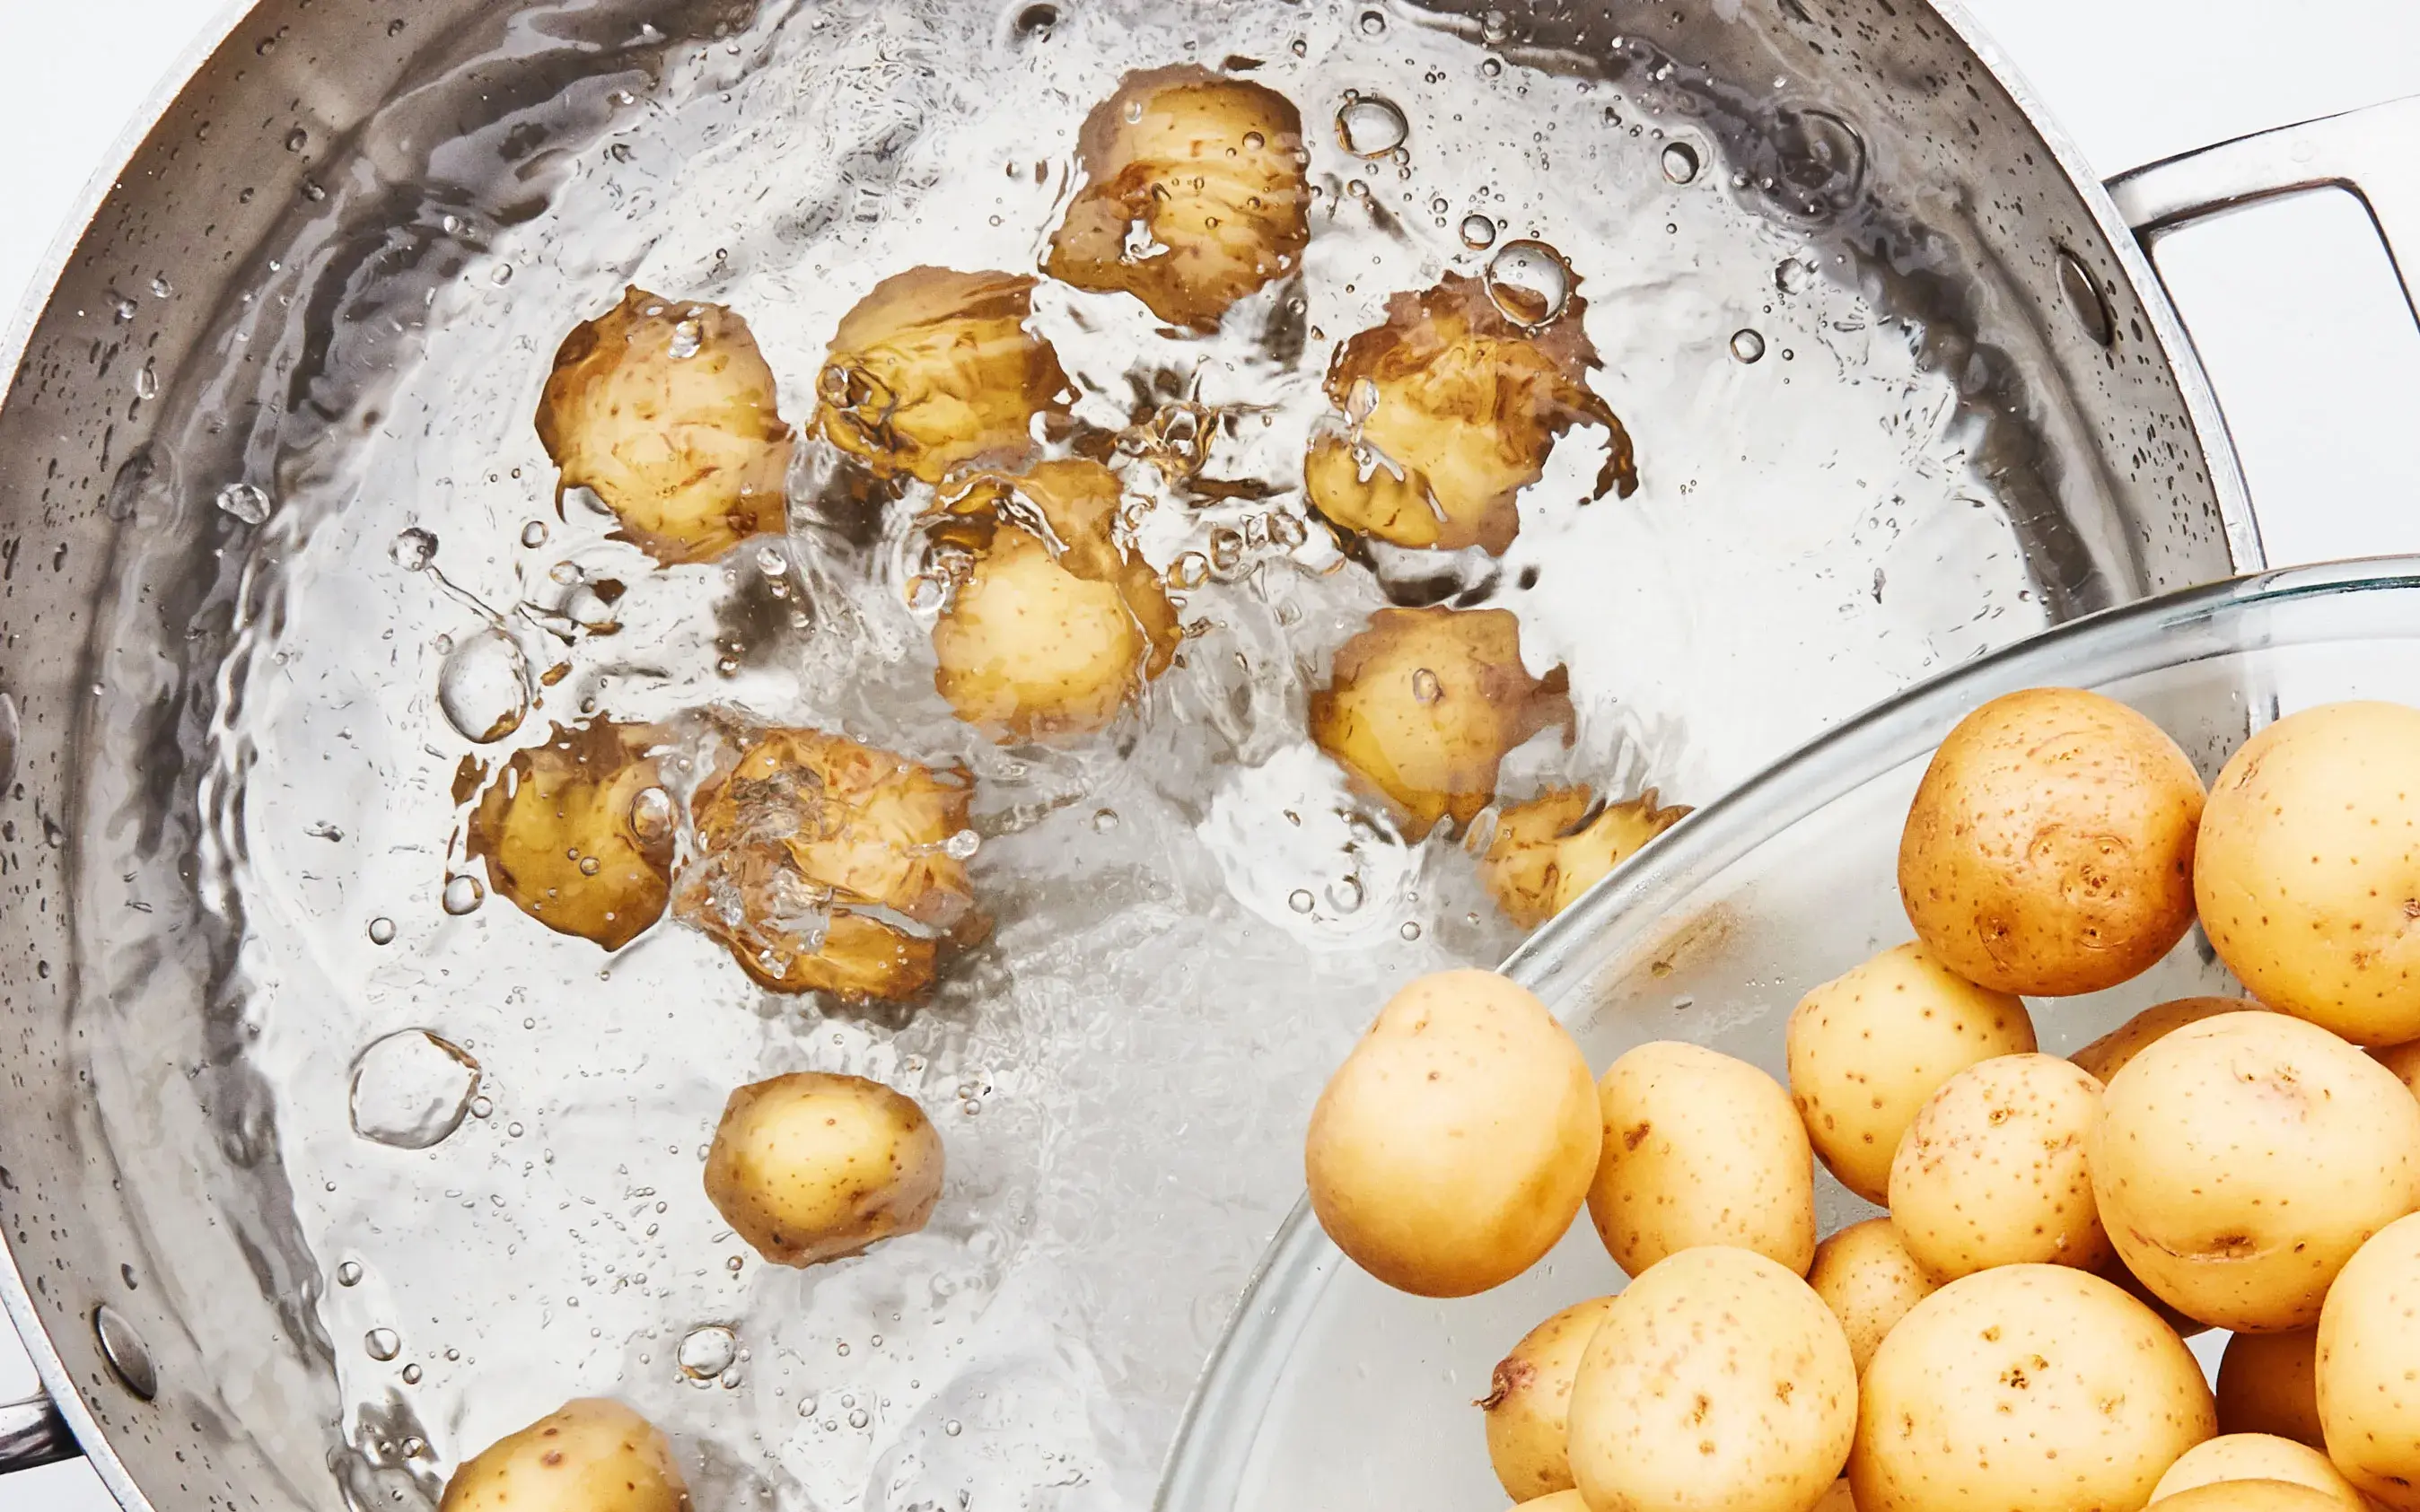 Boiling potato